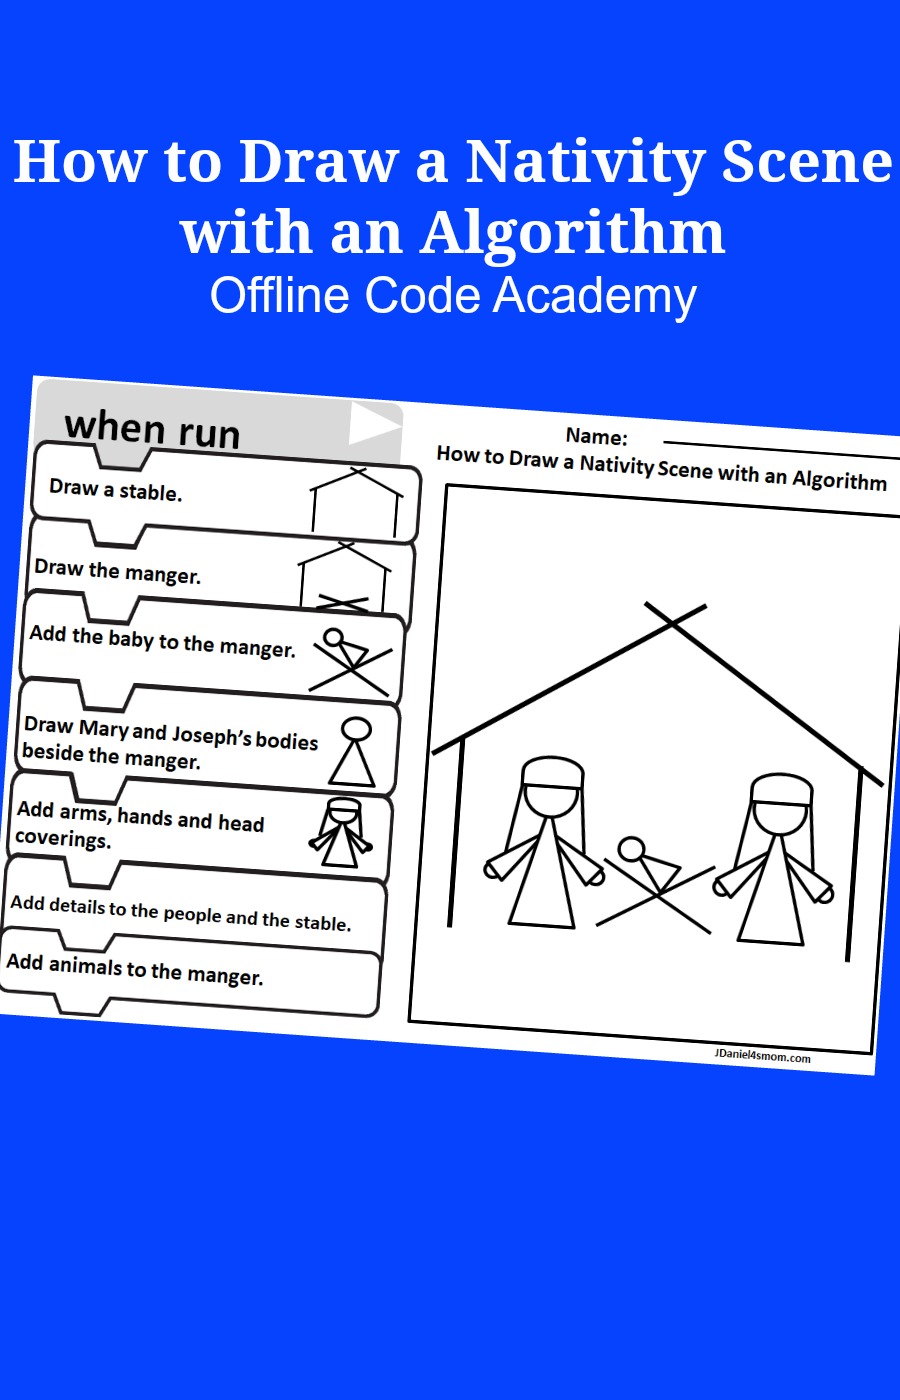 Offline Coding Academy- How to Draw a Nativity Scene with an Algorithm